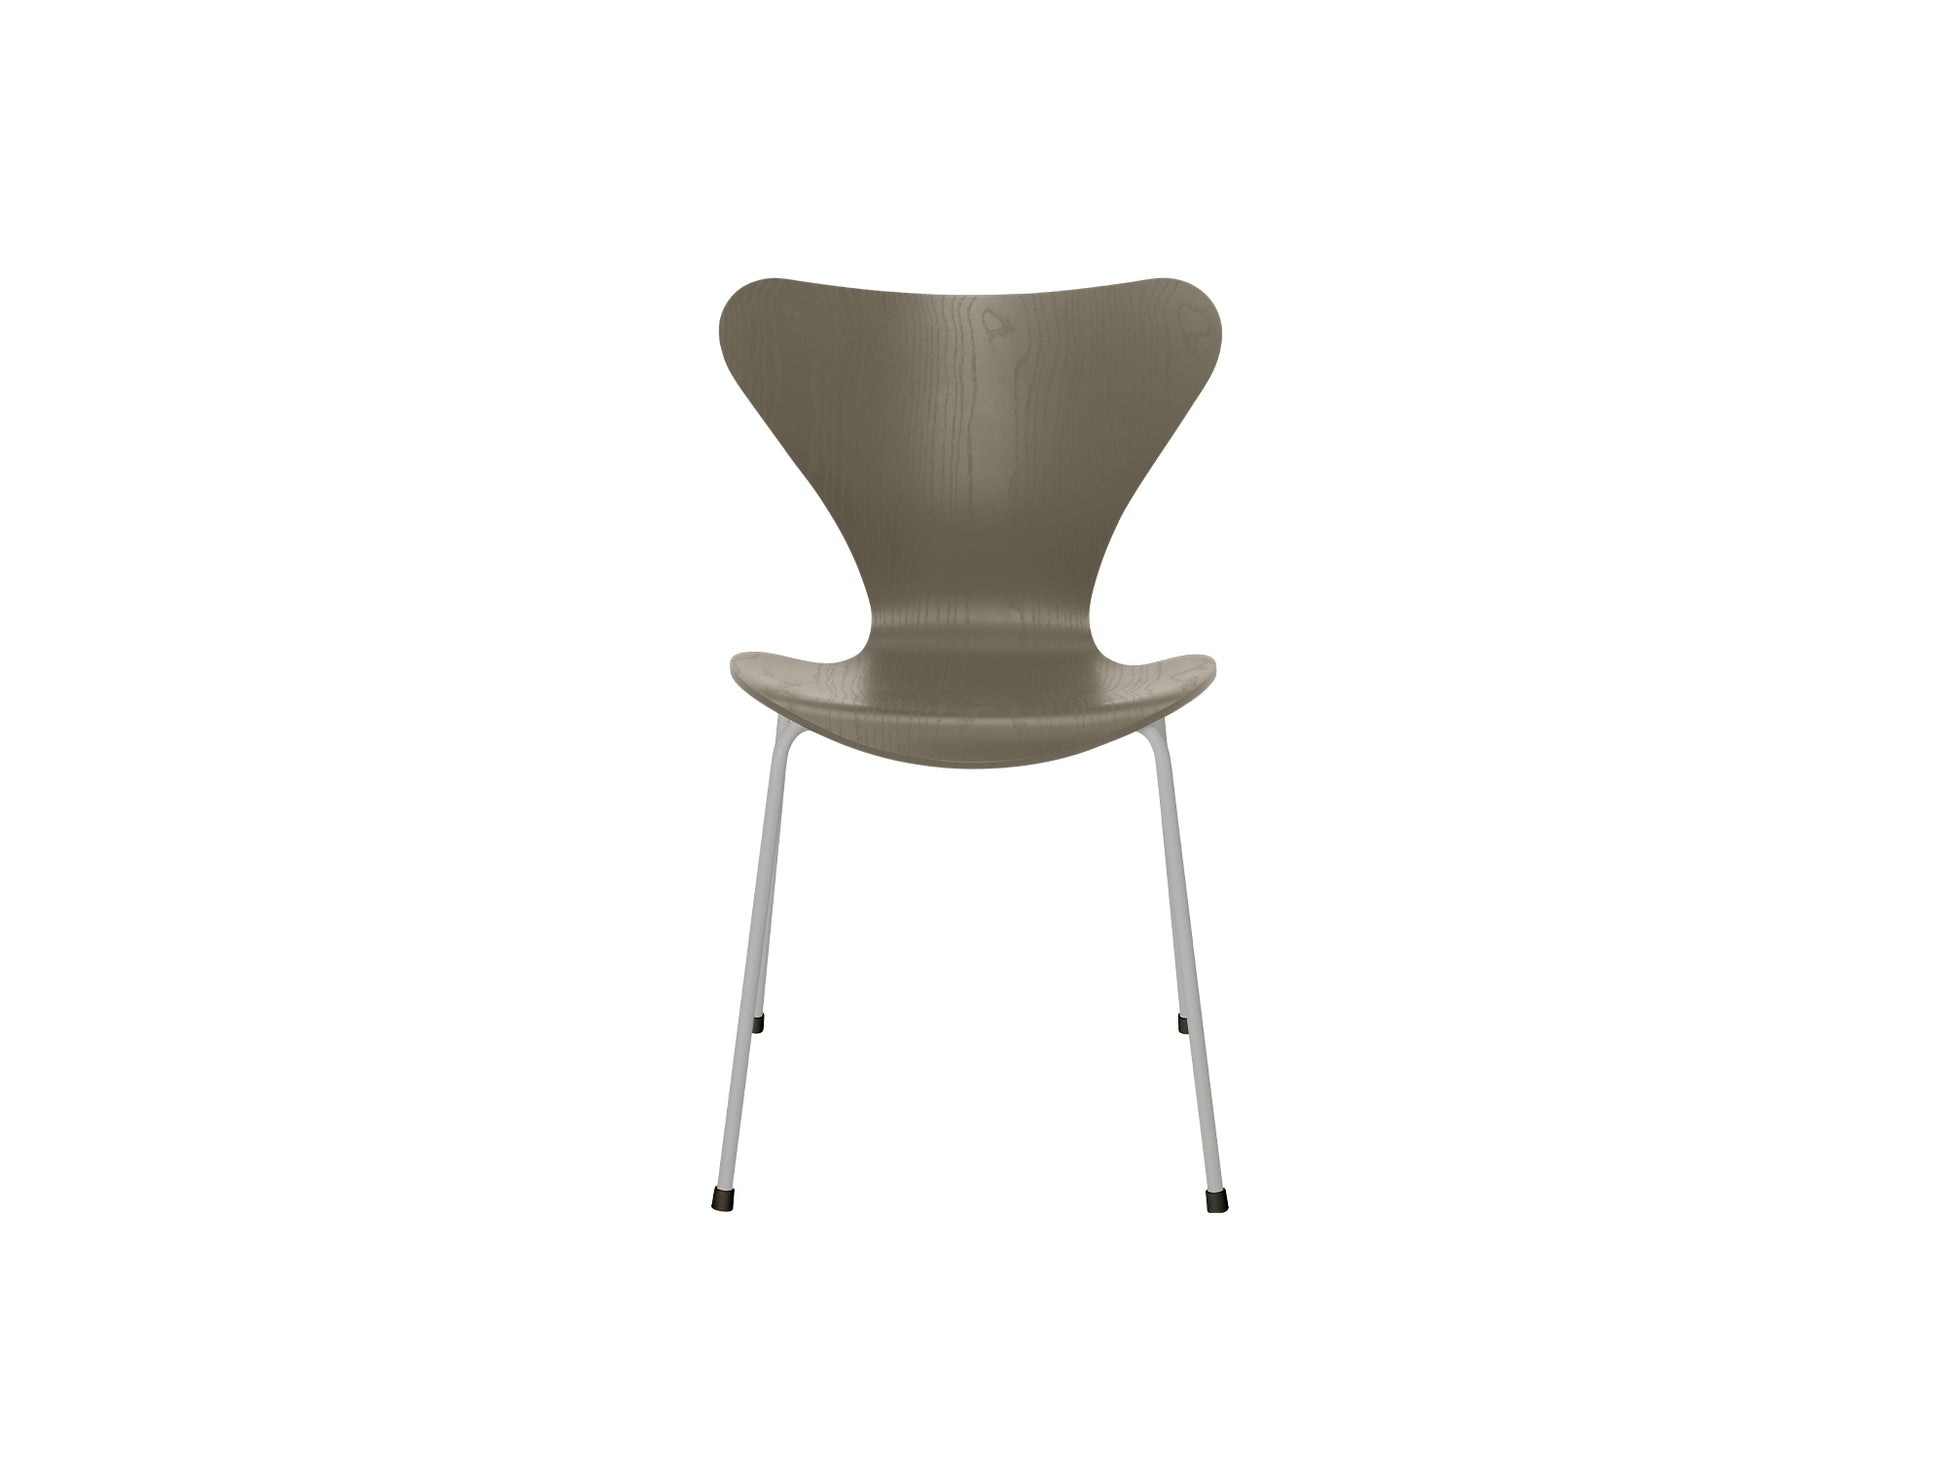 Series 7™ 3107 Dining Chair by Fritz Hansen - Olive Green Coloured Ash Veneer Shell / Nine Grey Steel